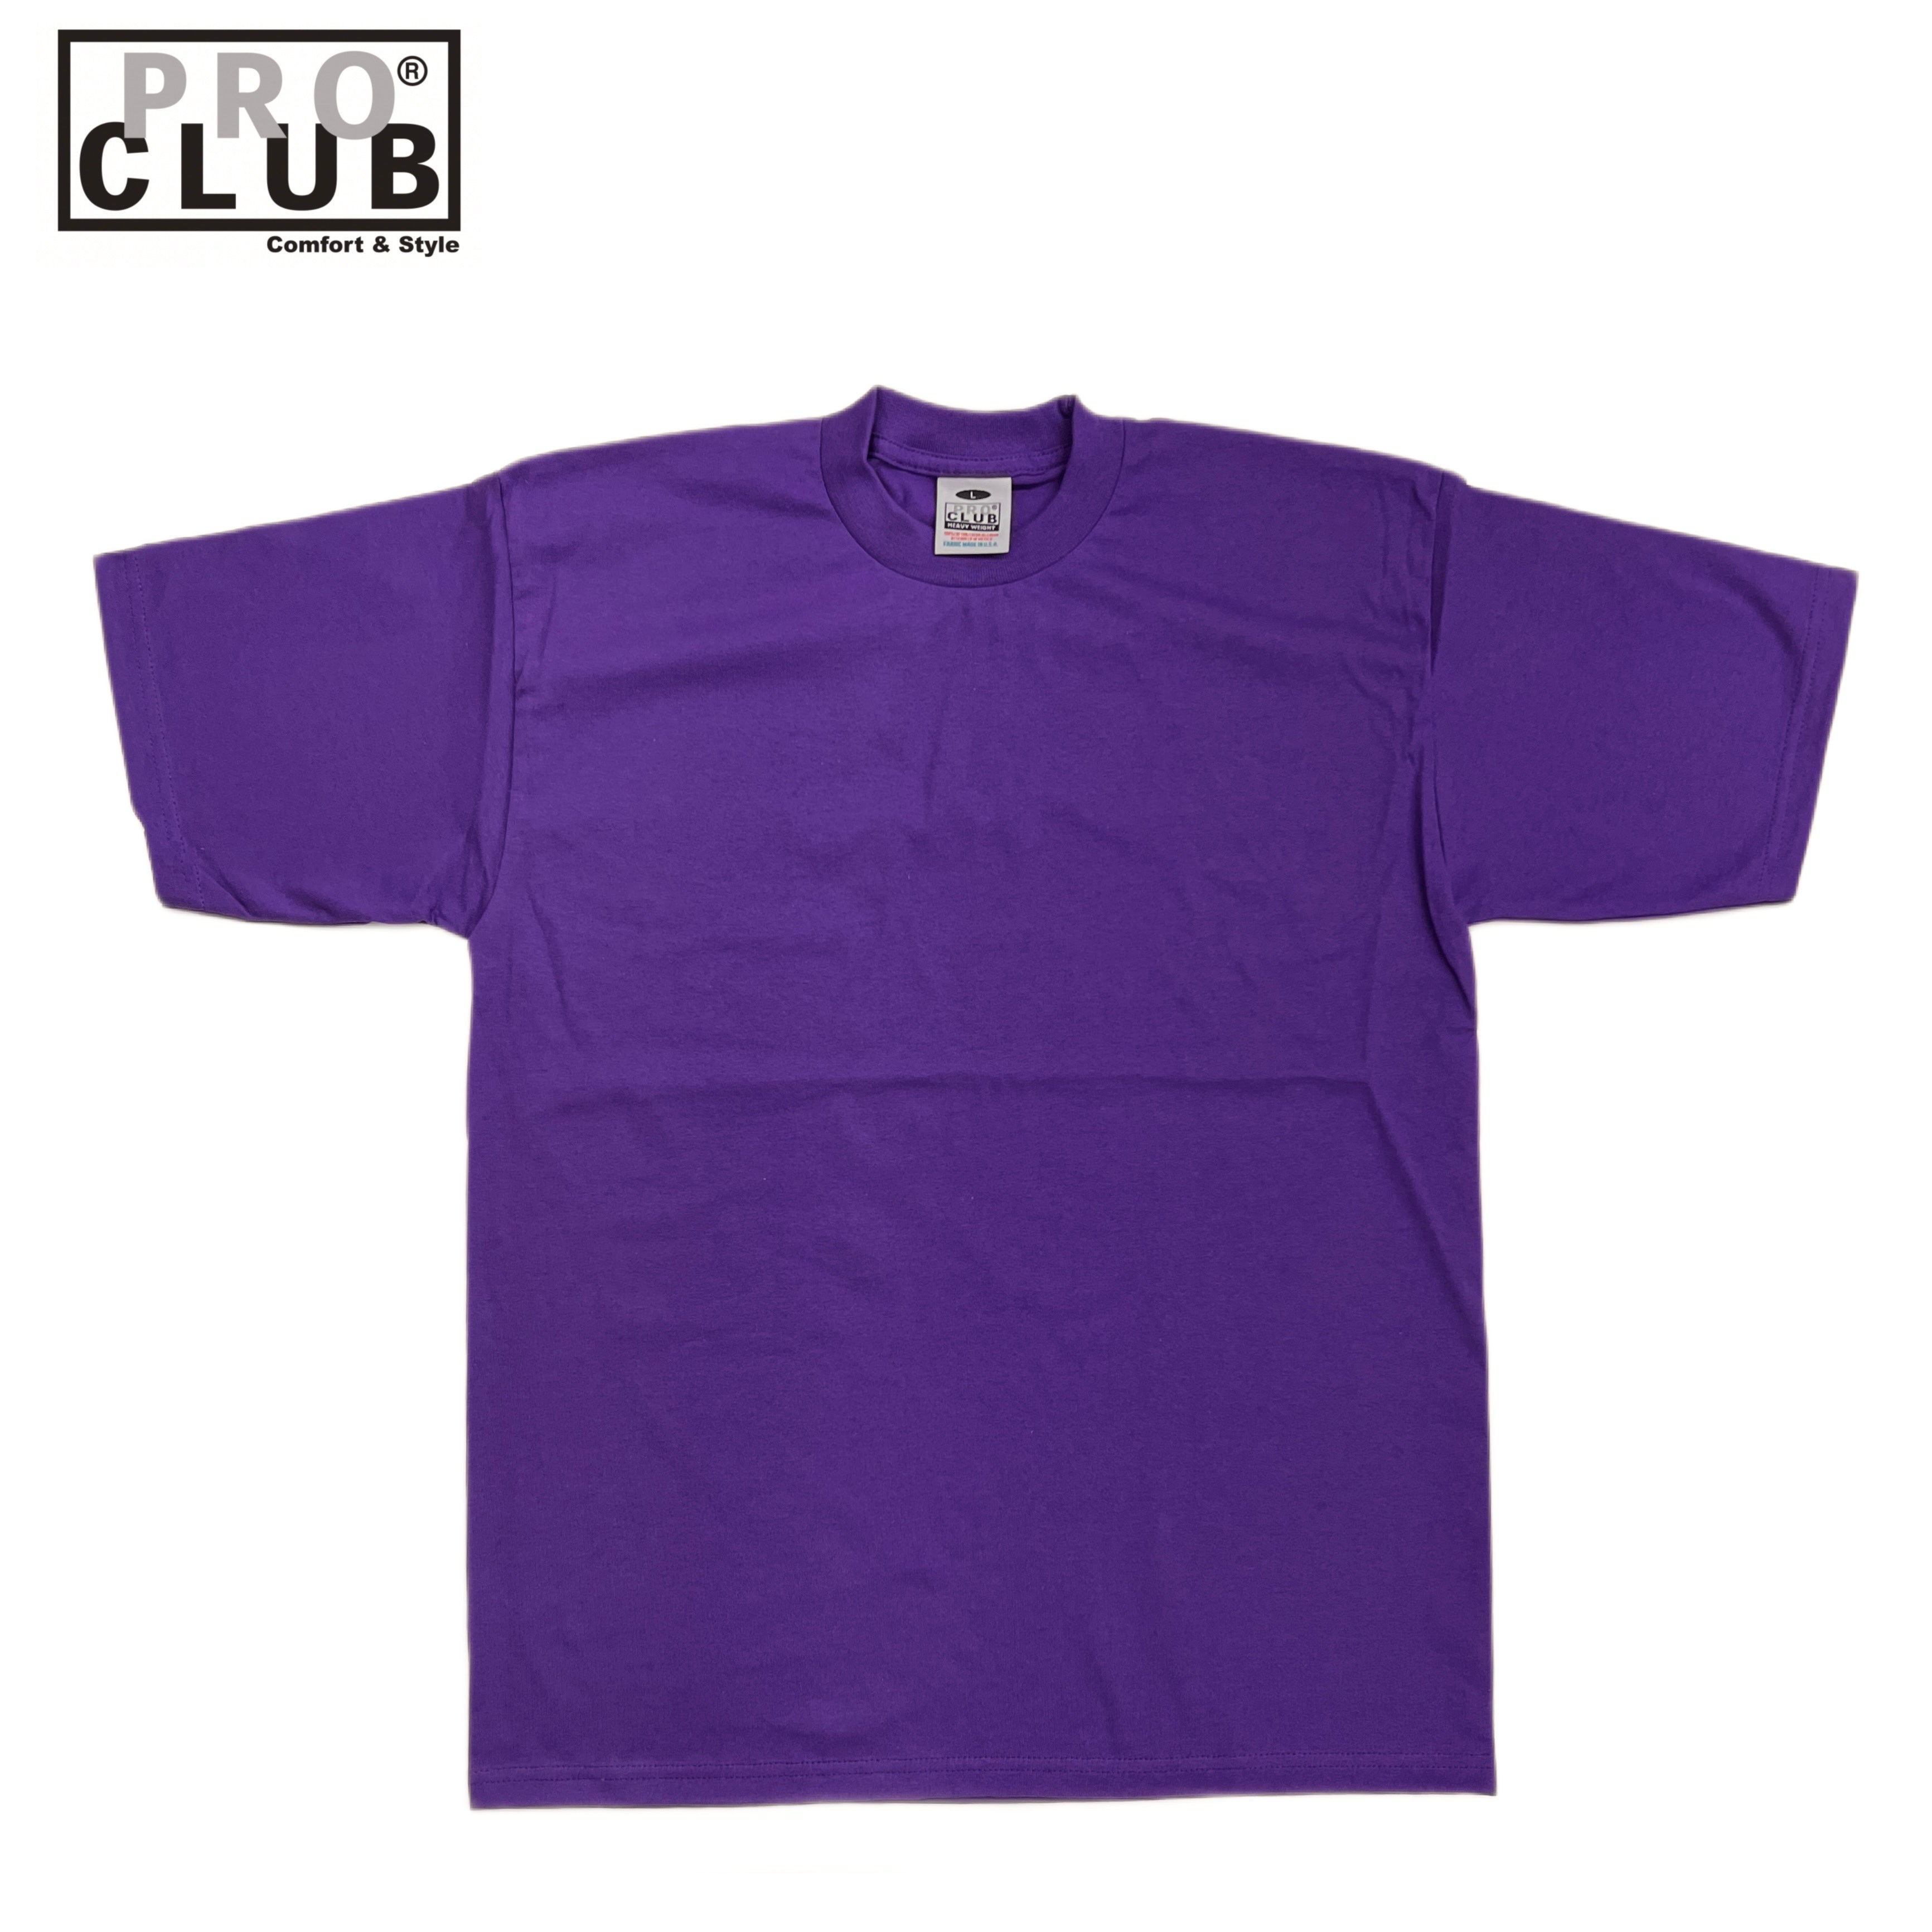 Pro Club Men's Heavyweight Cotton Short Sleeve Crew Neck T-Shirt - Purple